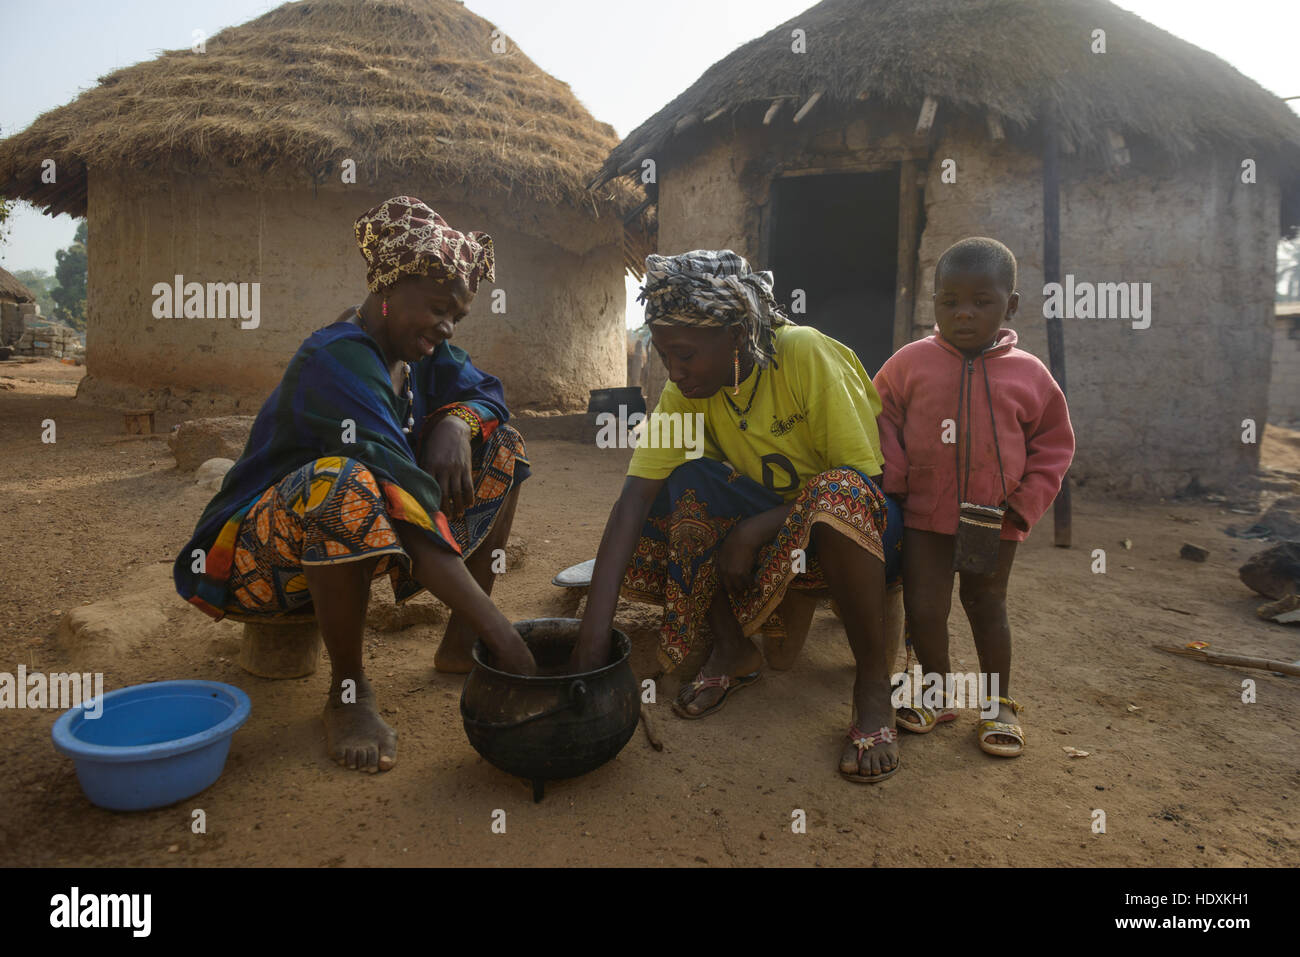 Village life in Guinea Stock Photo